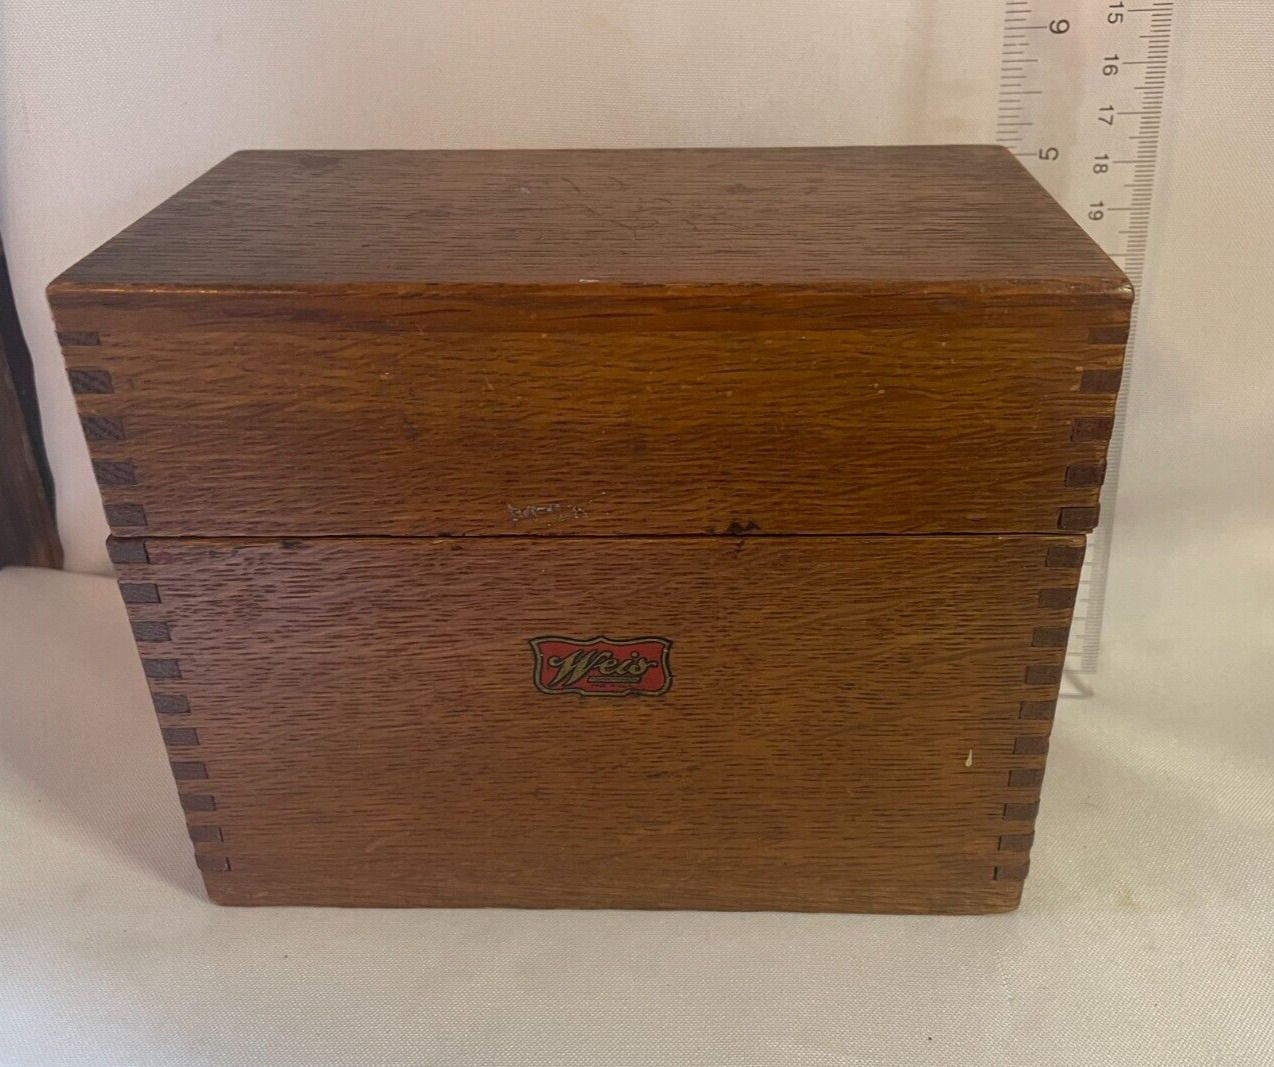 Vintage Weis Wooden Dovetailed Oak Recipe Box